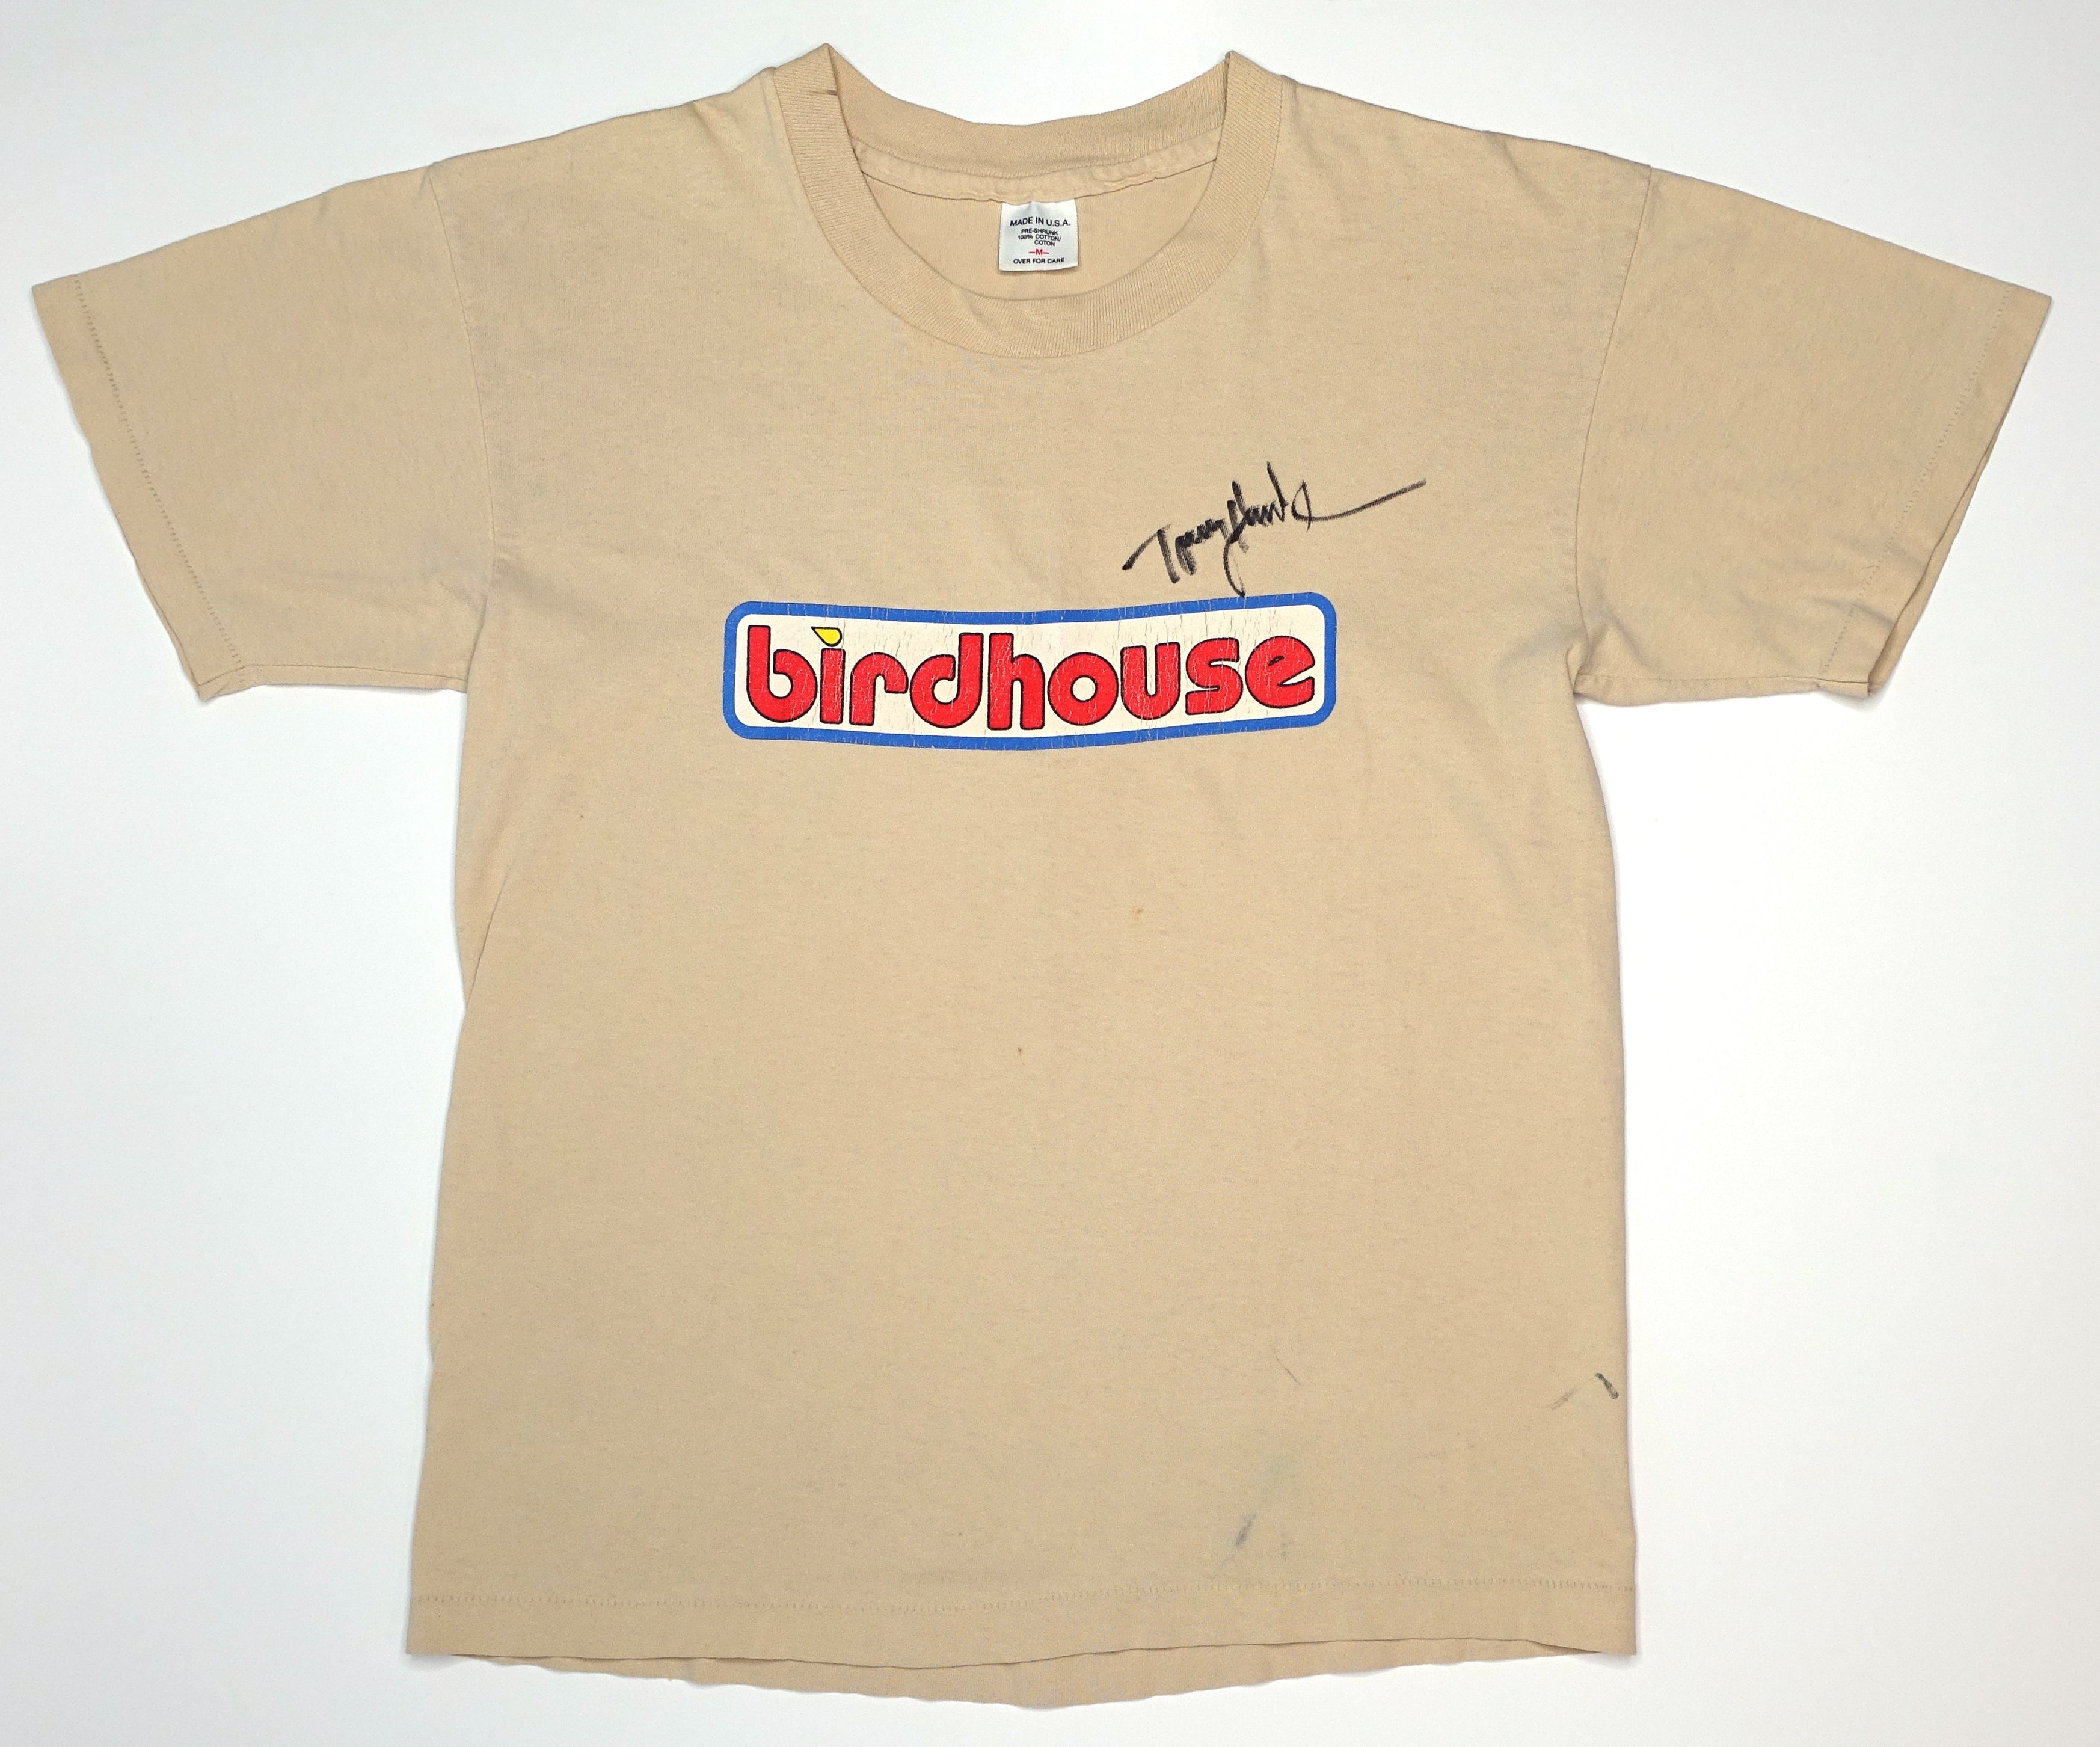 Birdhouse Skateboards - Bar Logo (Autographed by Tony Hawk) 90's Shirt Size Medium